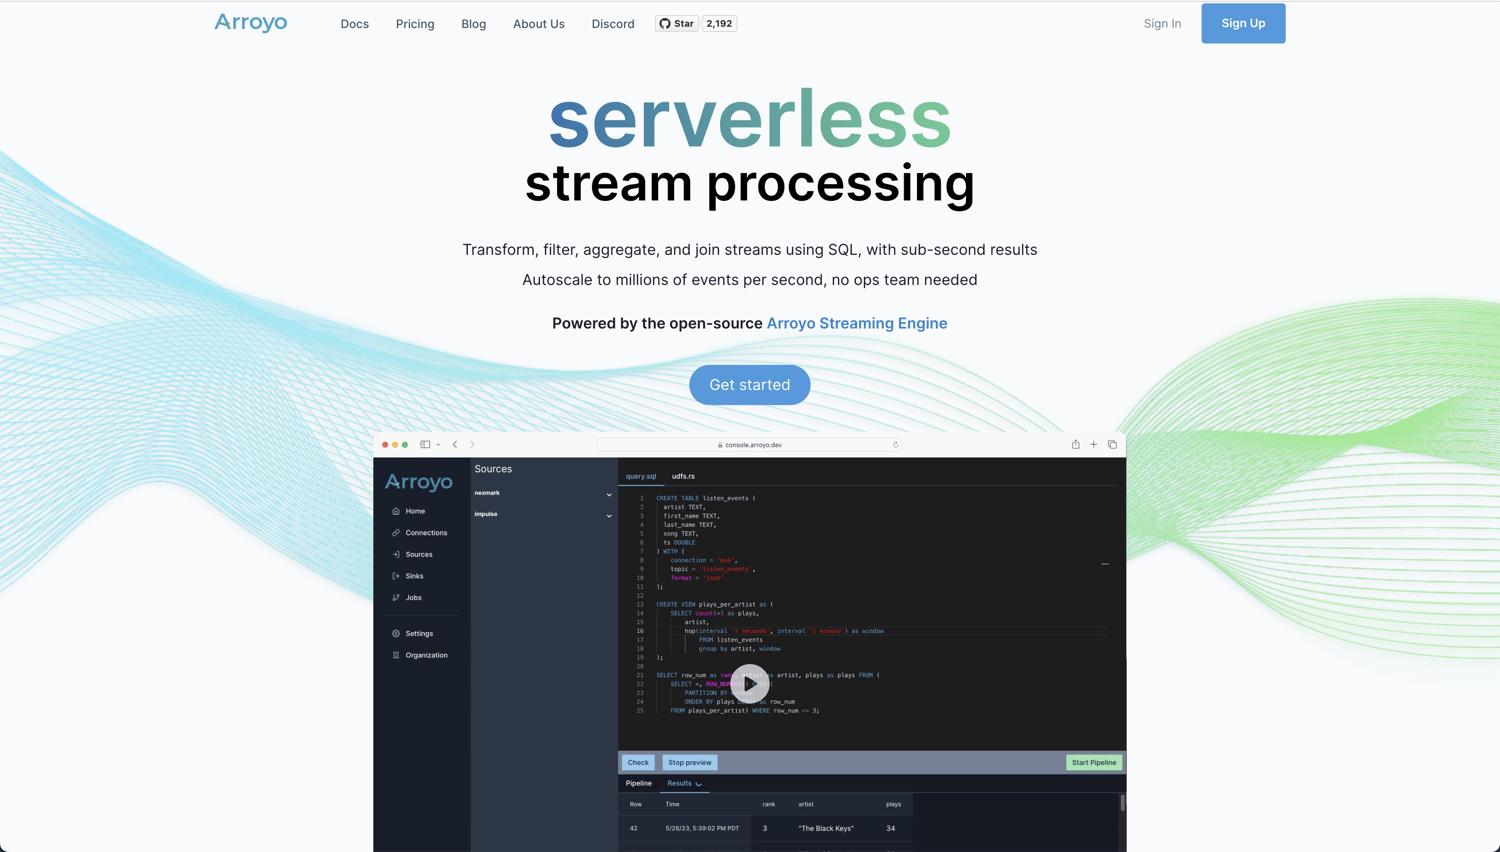 Arroyo serverless stream processing homepage